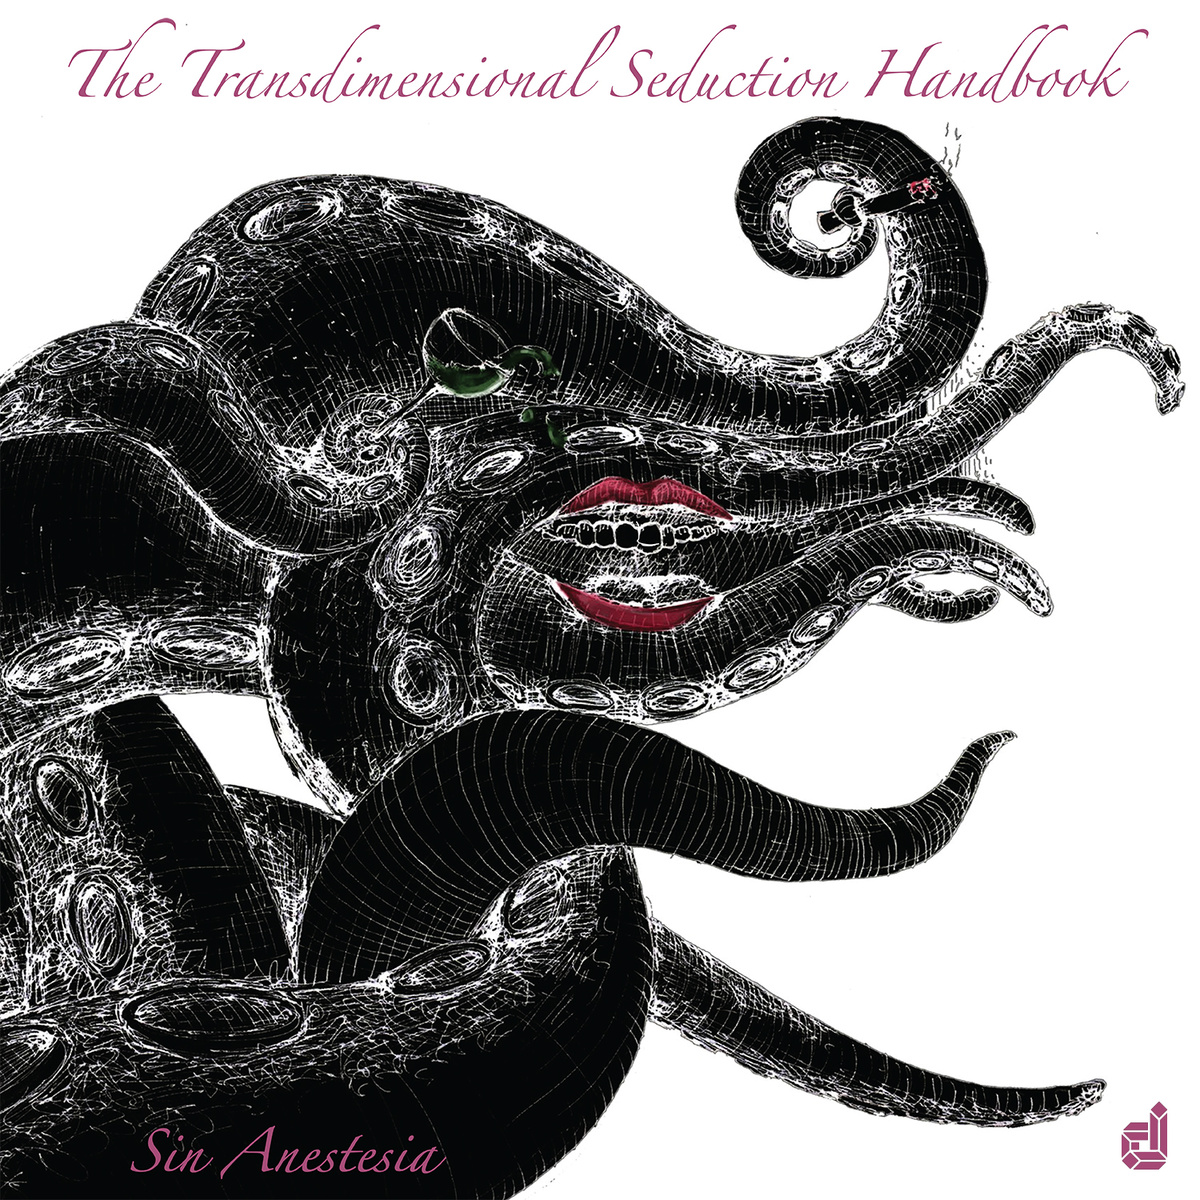 The Transdimensional Seduction Handbook